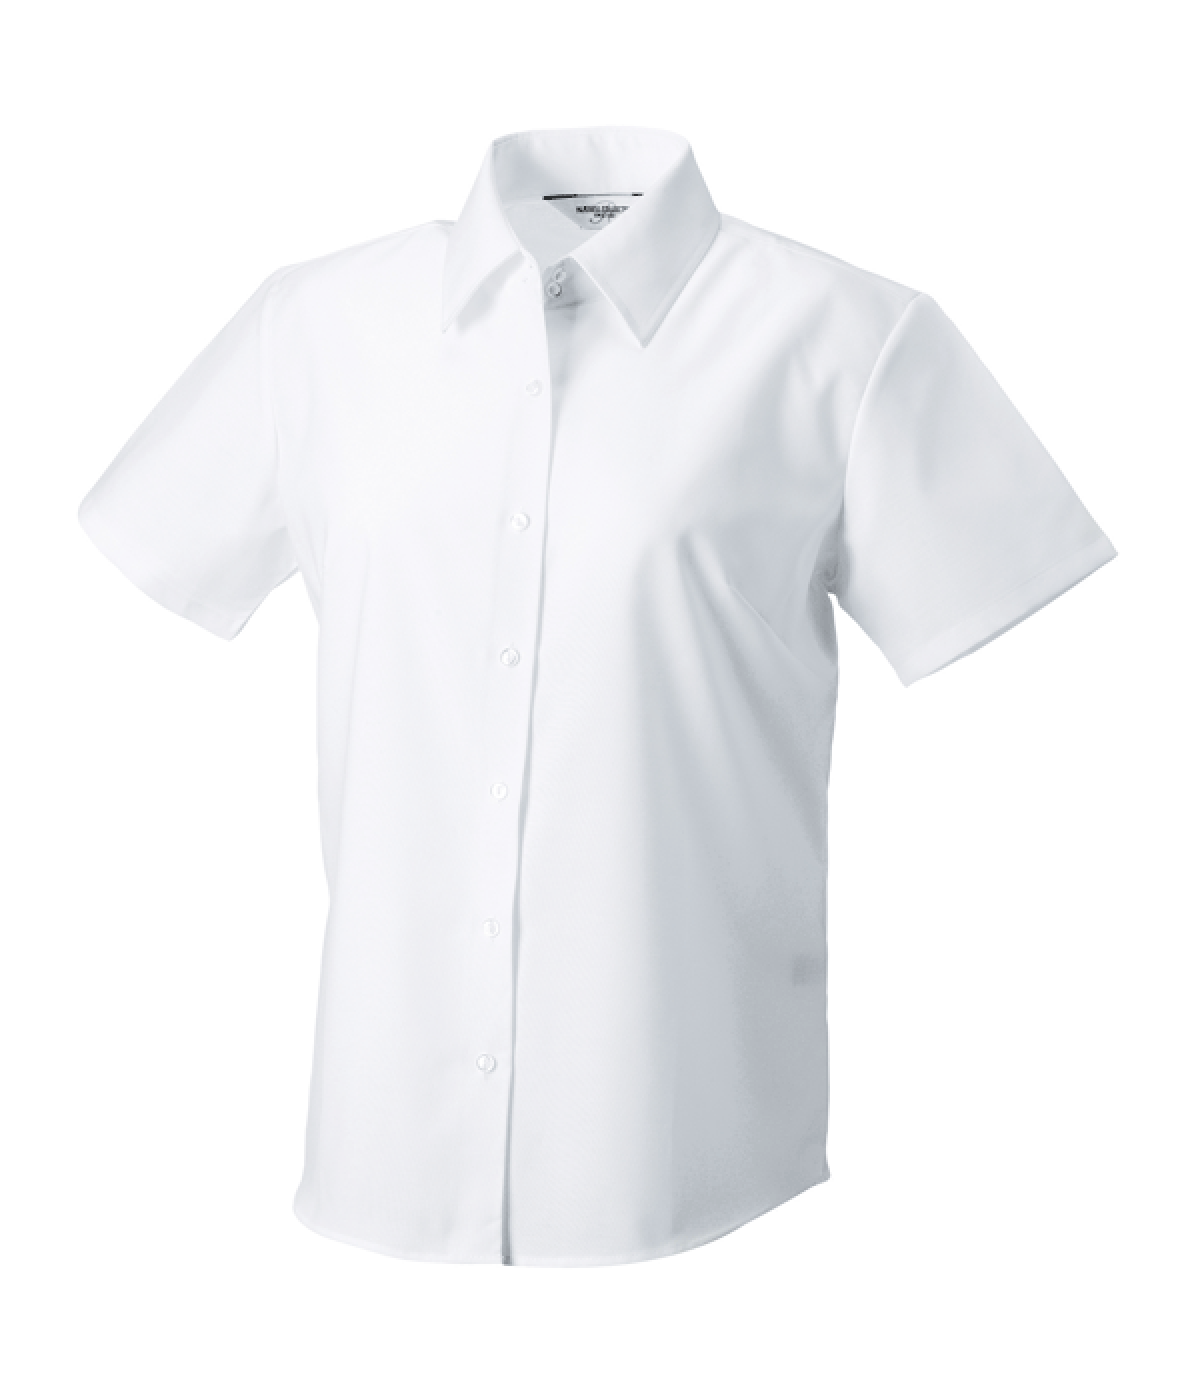 BC - Girls short sleeve oxford shirt with logo